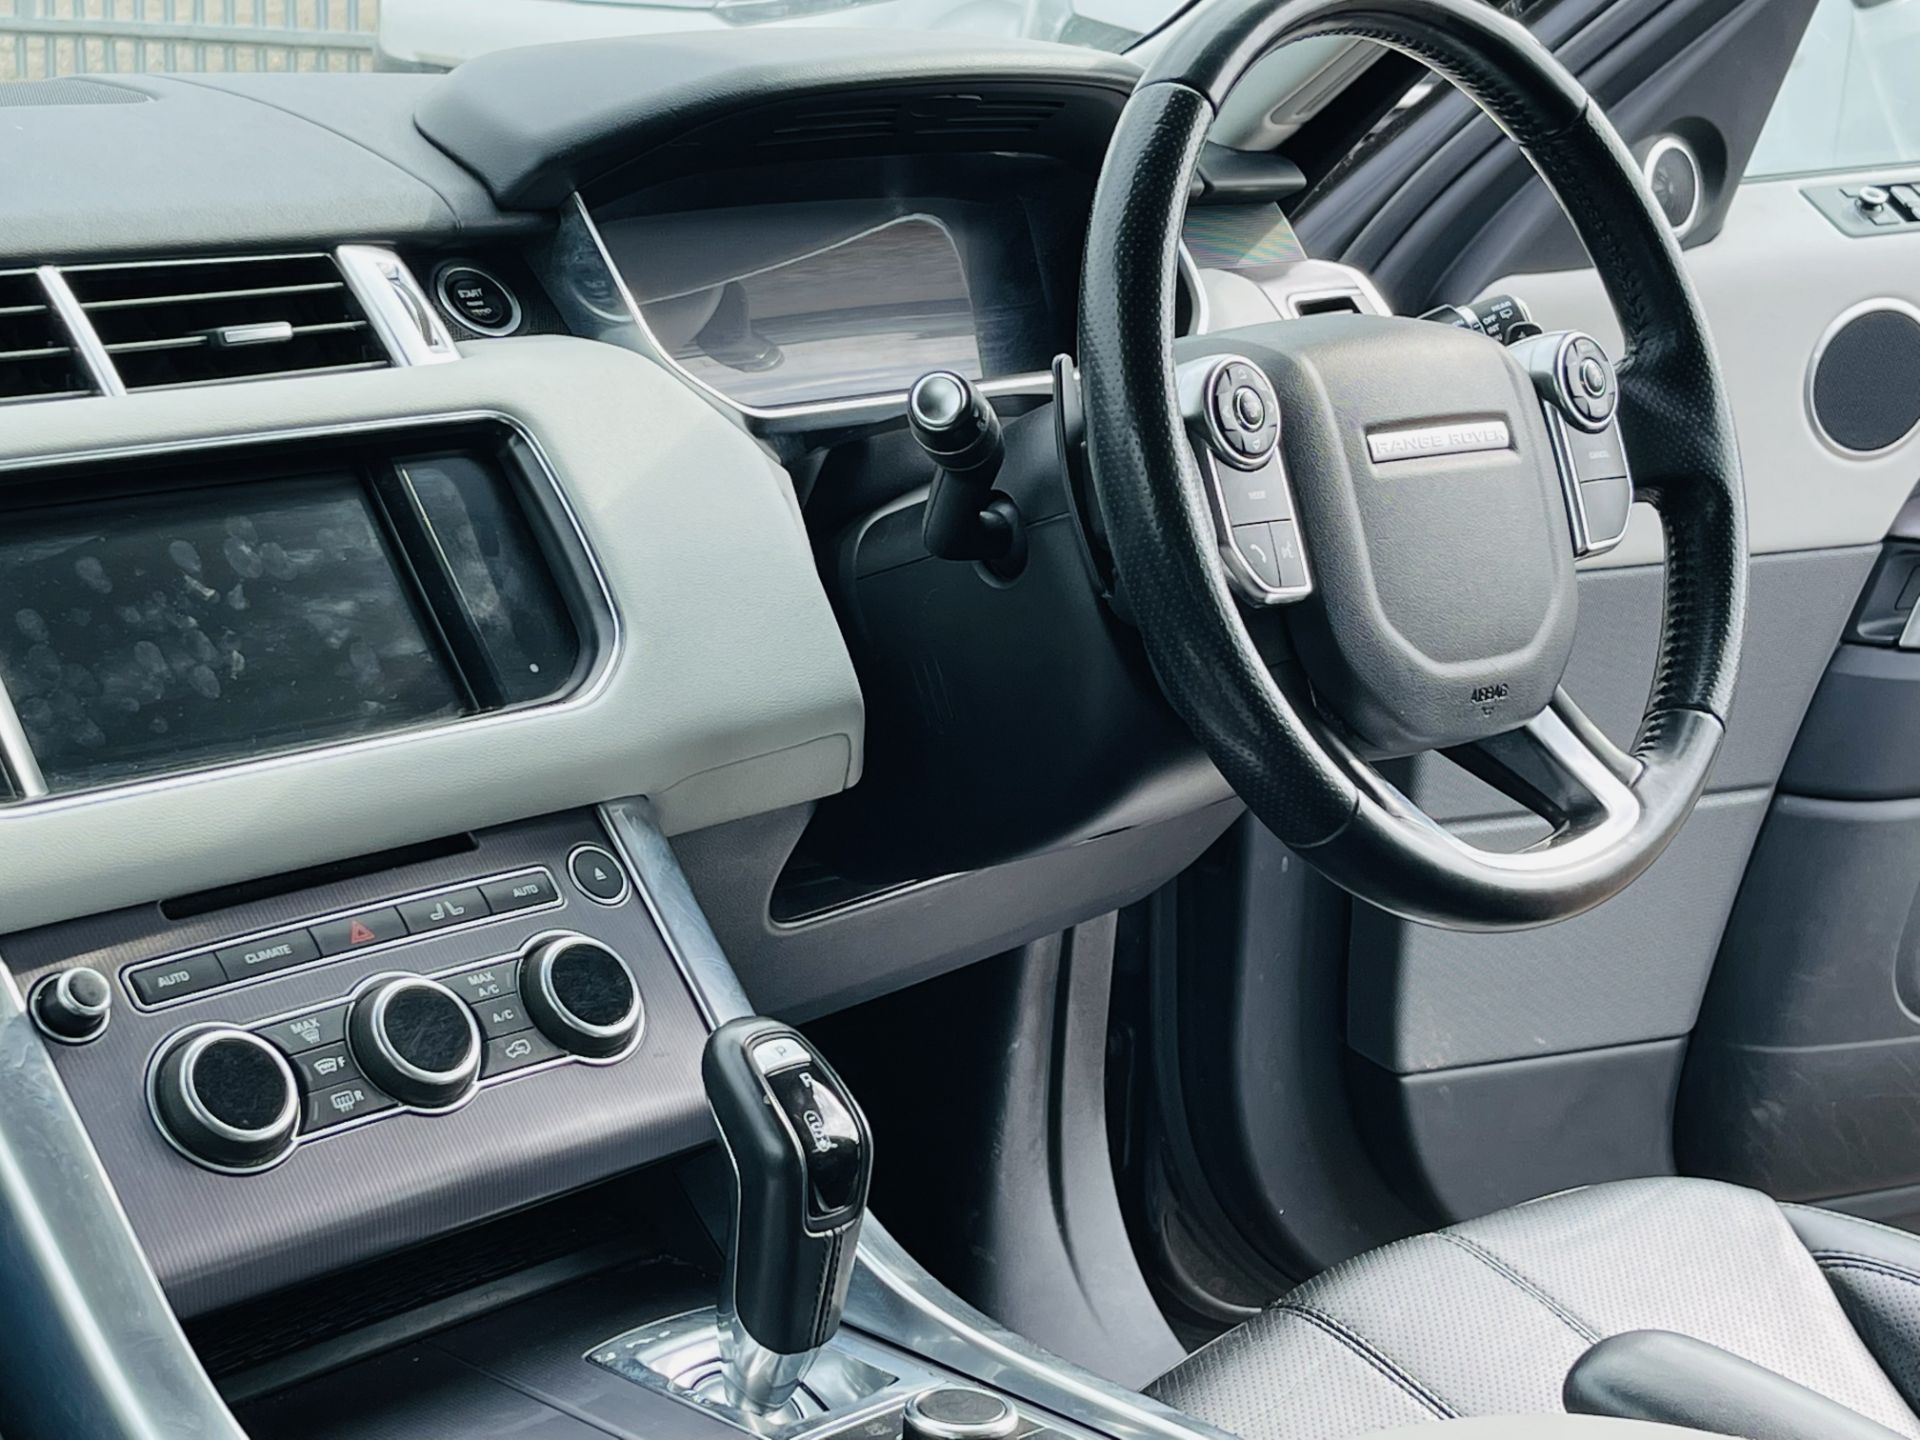 Range Rover Sport HSE 3.0 SDV6 Auto CommandShift 2014 '64 Reg' Sat Nav - A/C - No Vat - Image 32 of 48